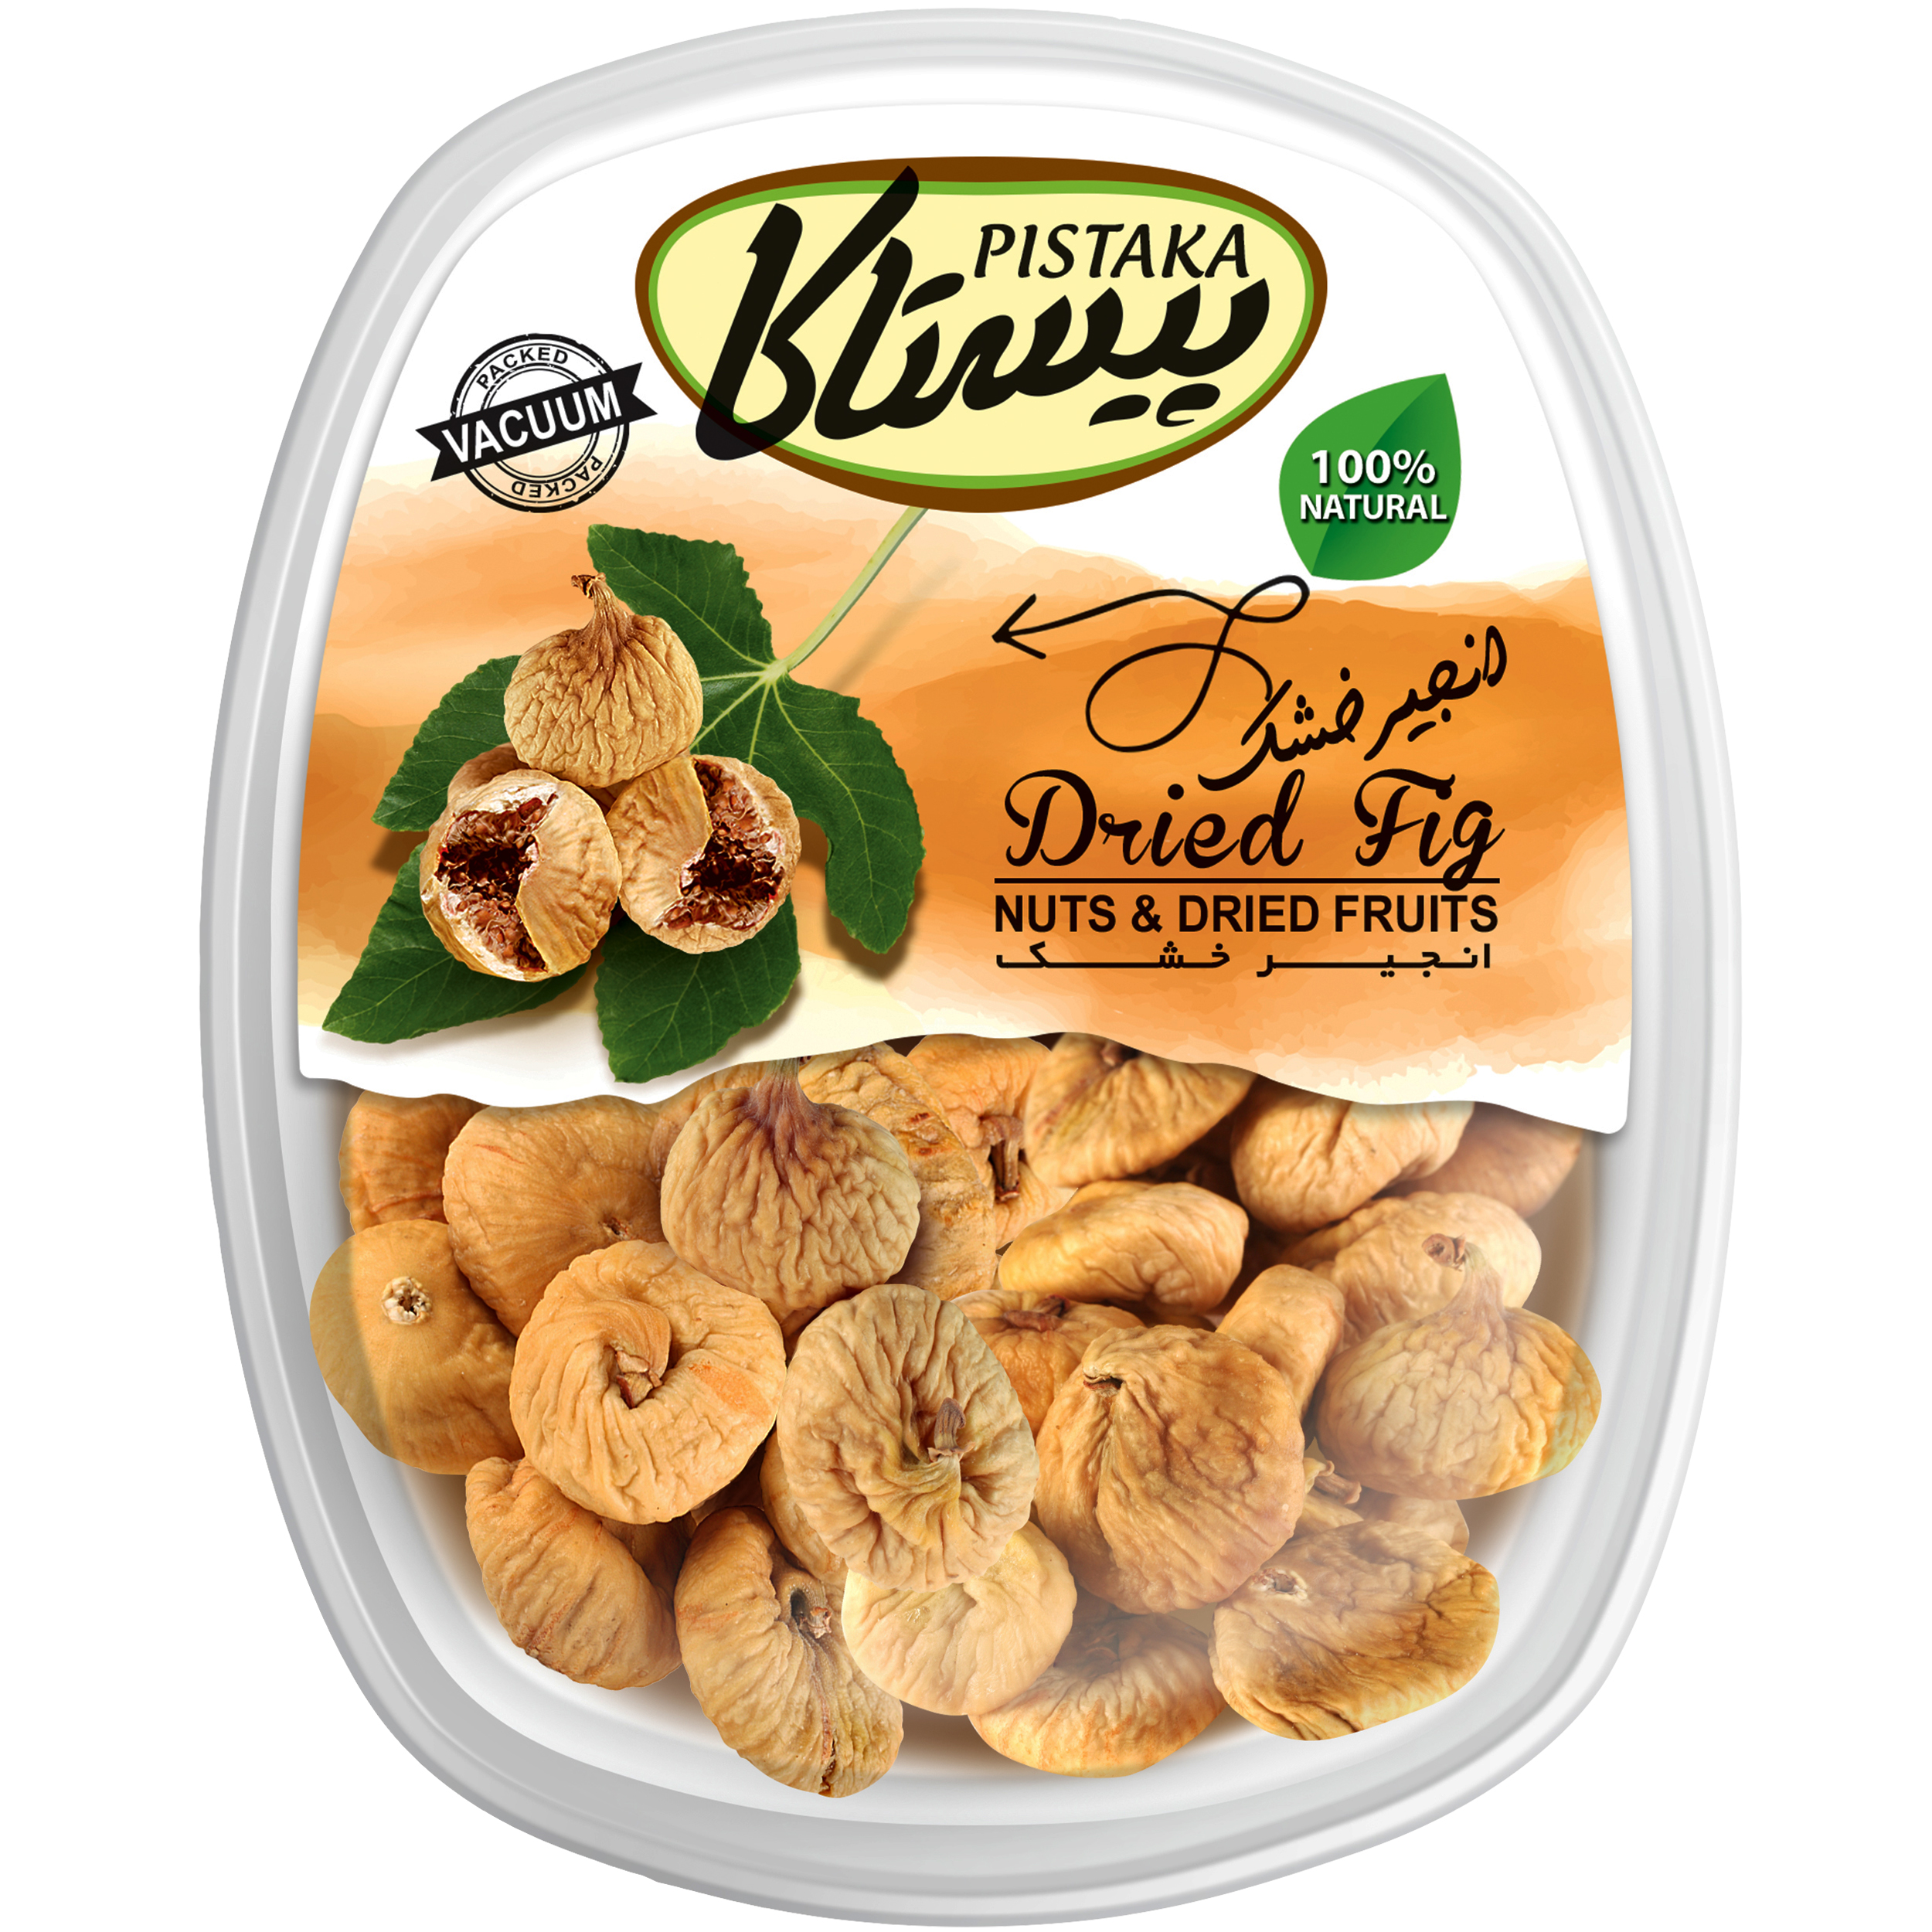 PISTAKA Dried fig-200 grams